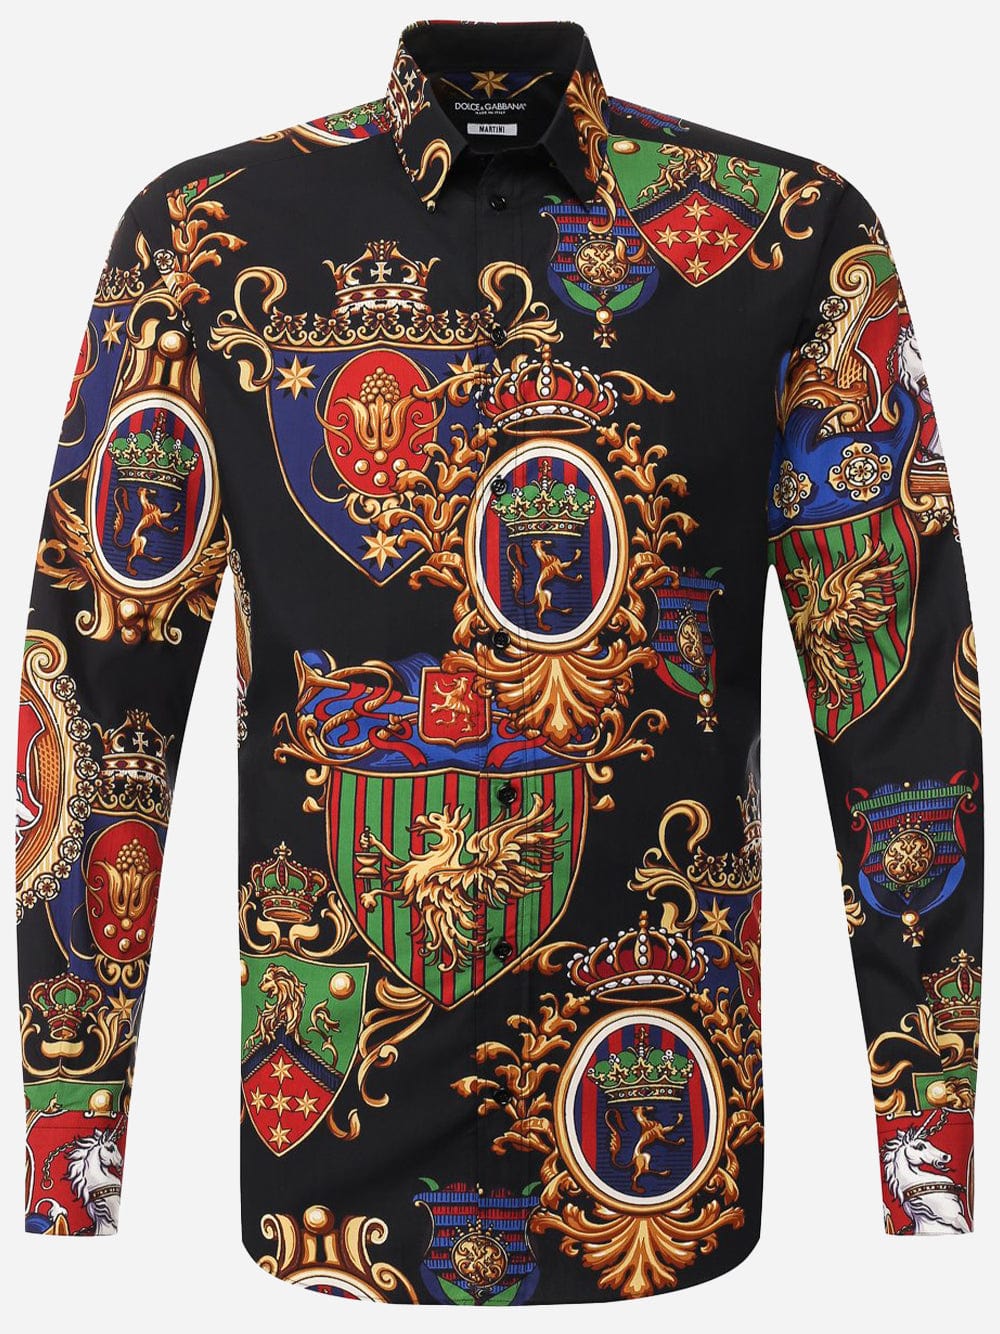 Dolce & Gabbana Heraldry Print Shirt